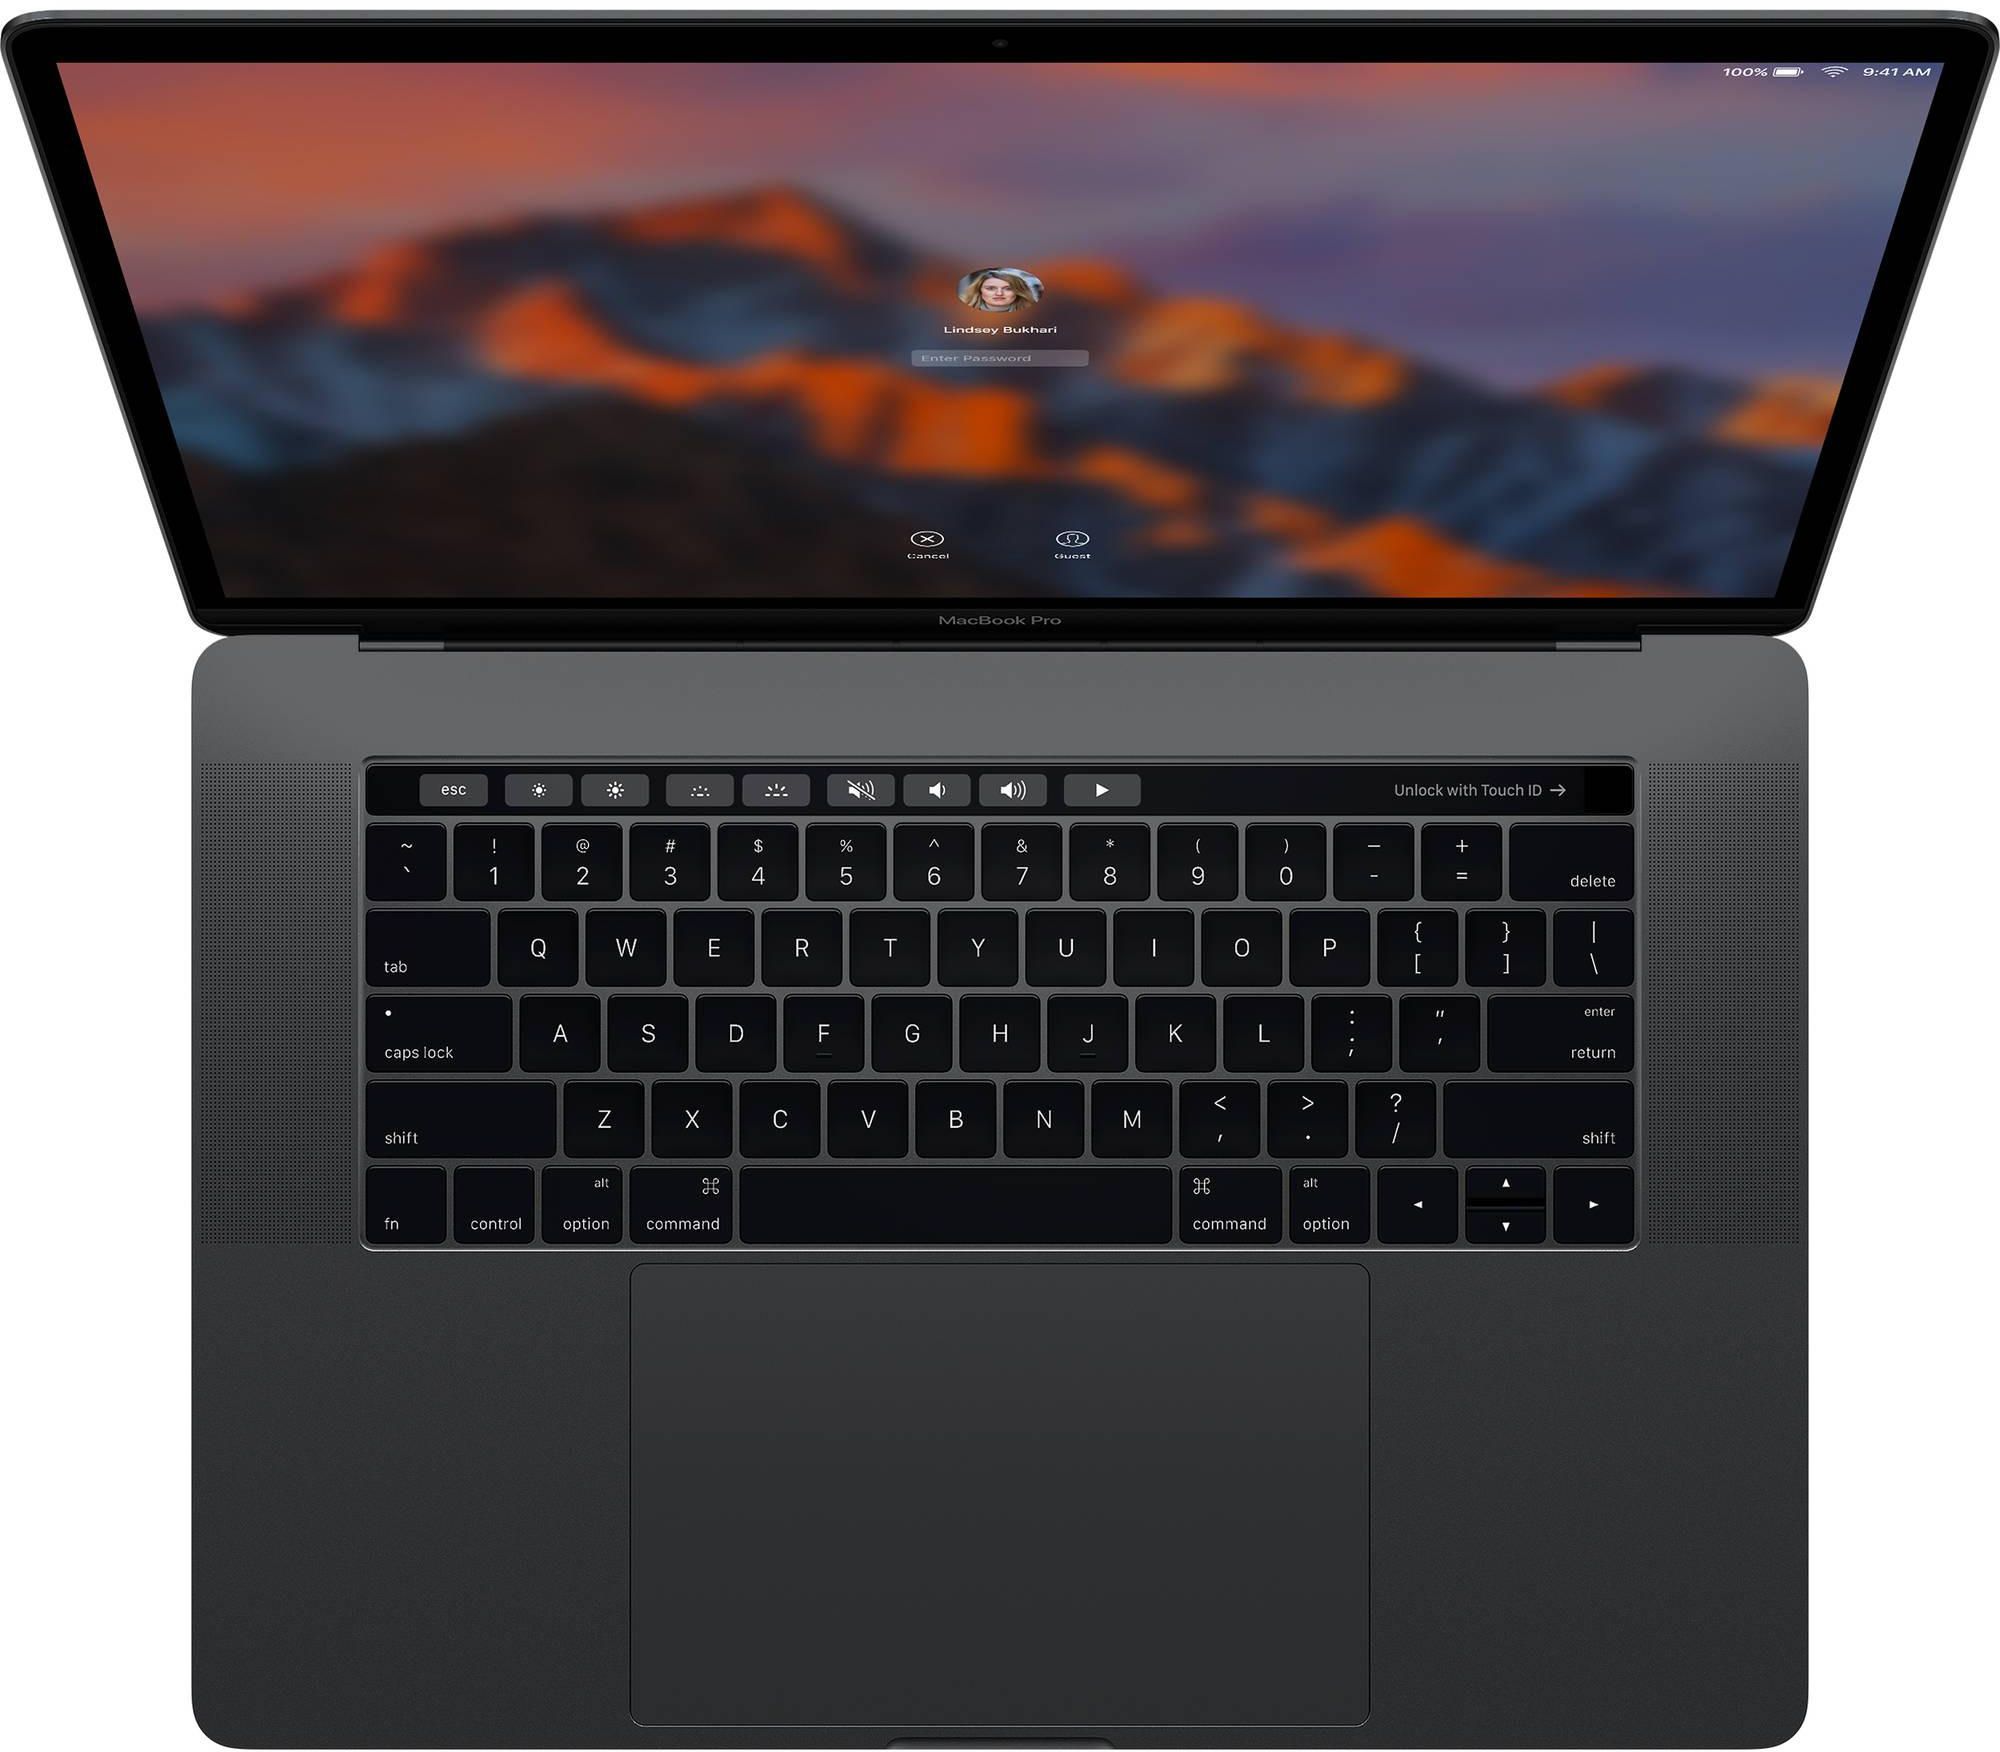 Apple MacBook Pro w/ Touch Bar MLH42 15-inch Laptop, Space Grey - Intel Core i7, 16GB RAM, 512GB SSD, 2GB VGA, macOS Sierra